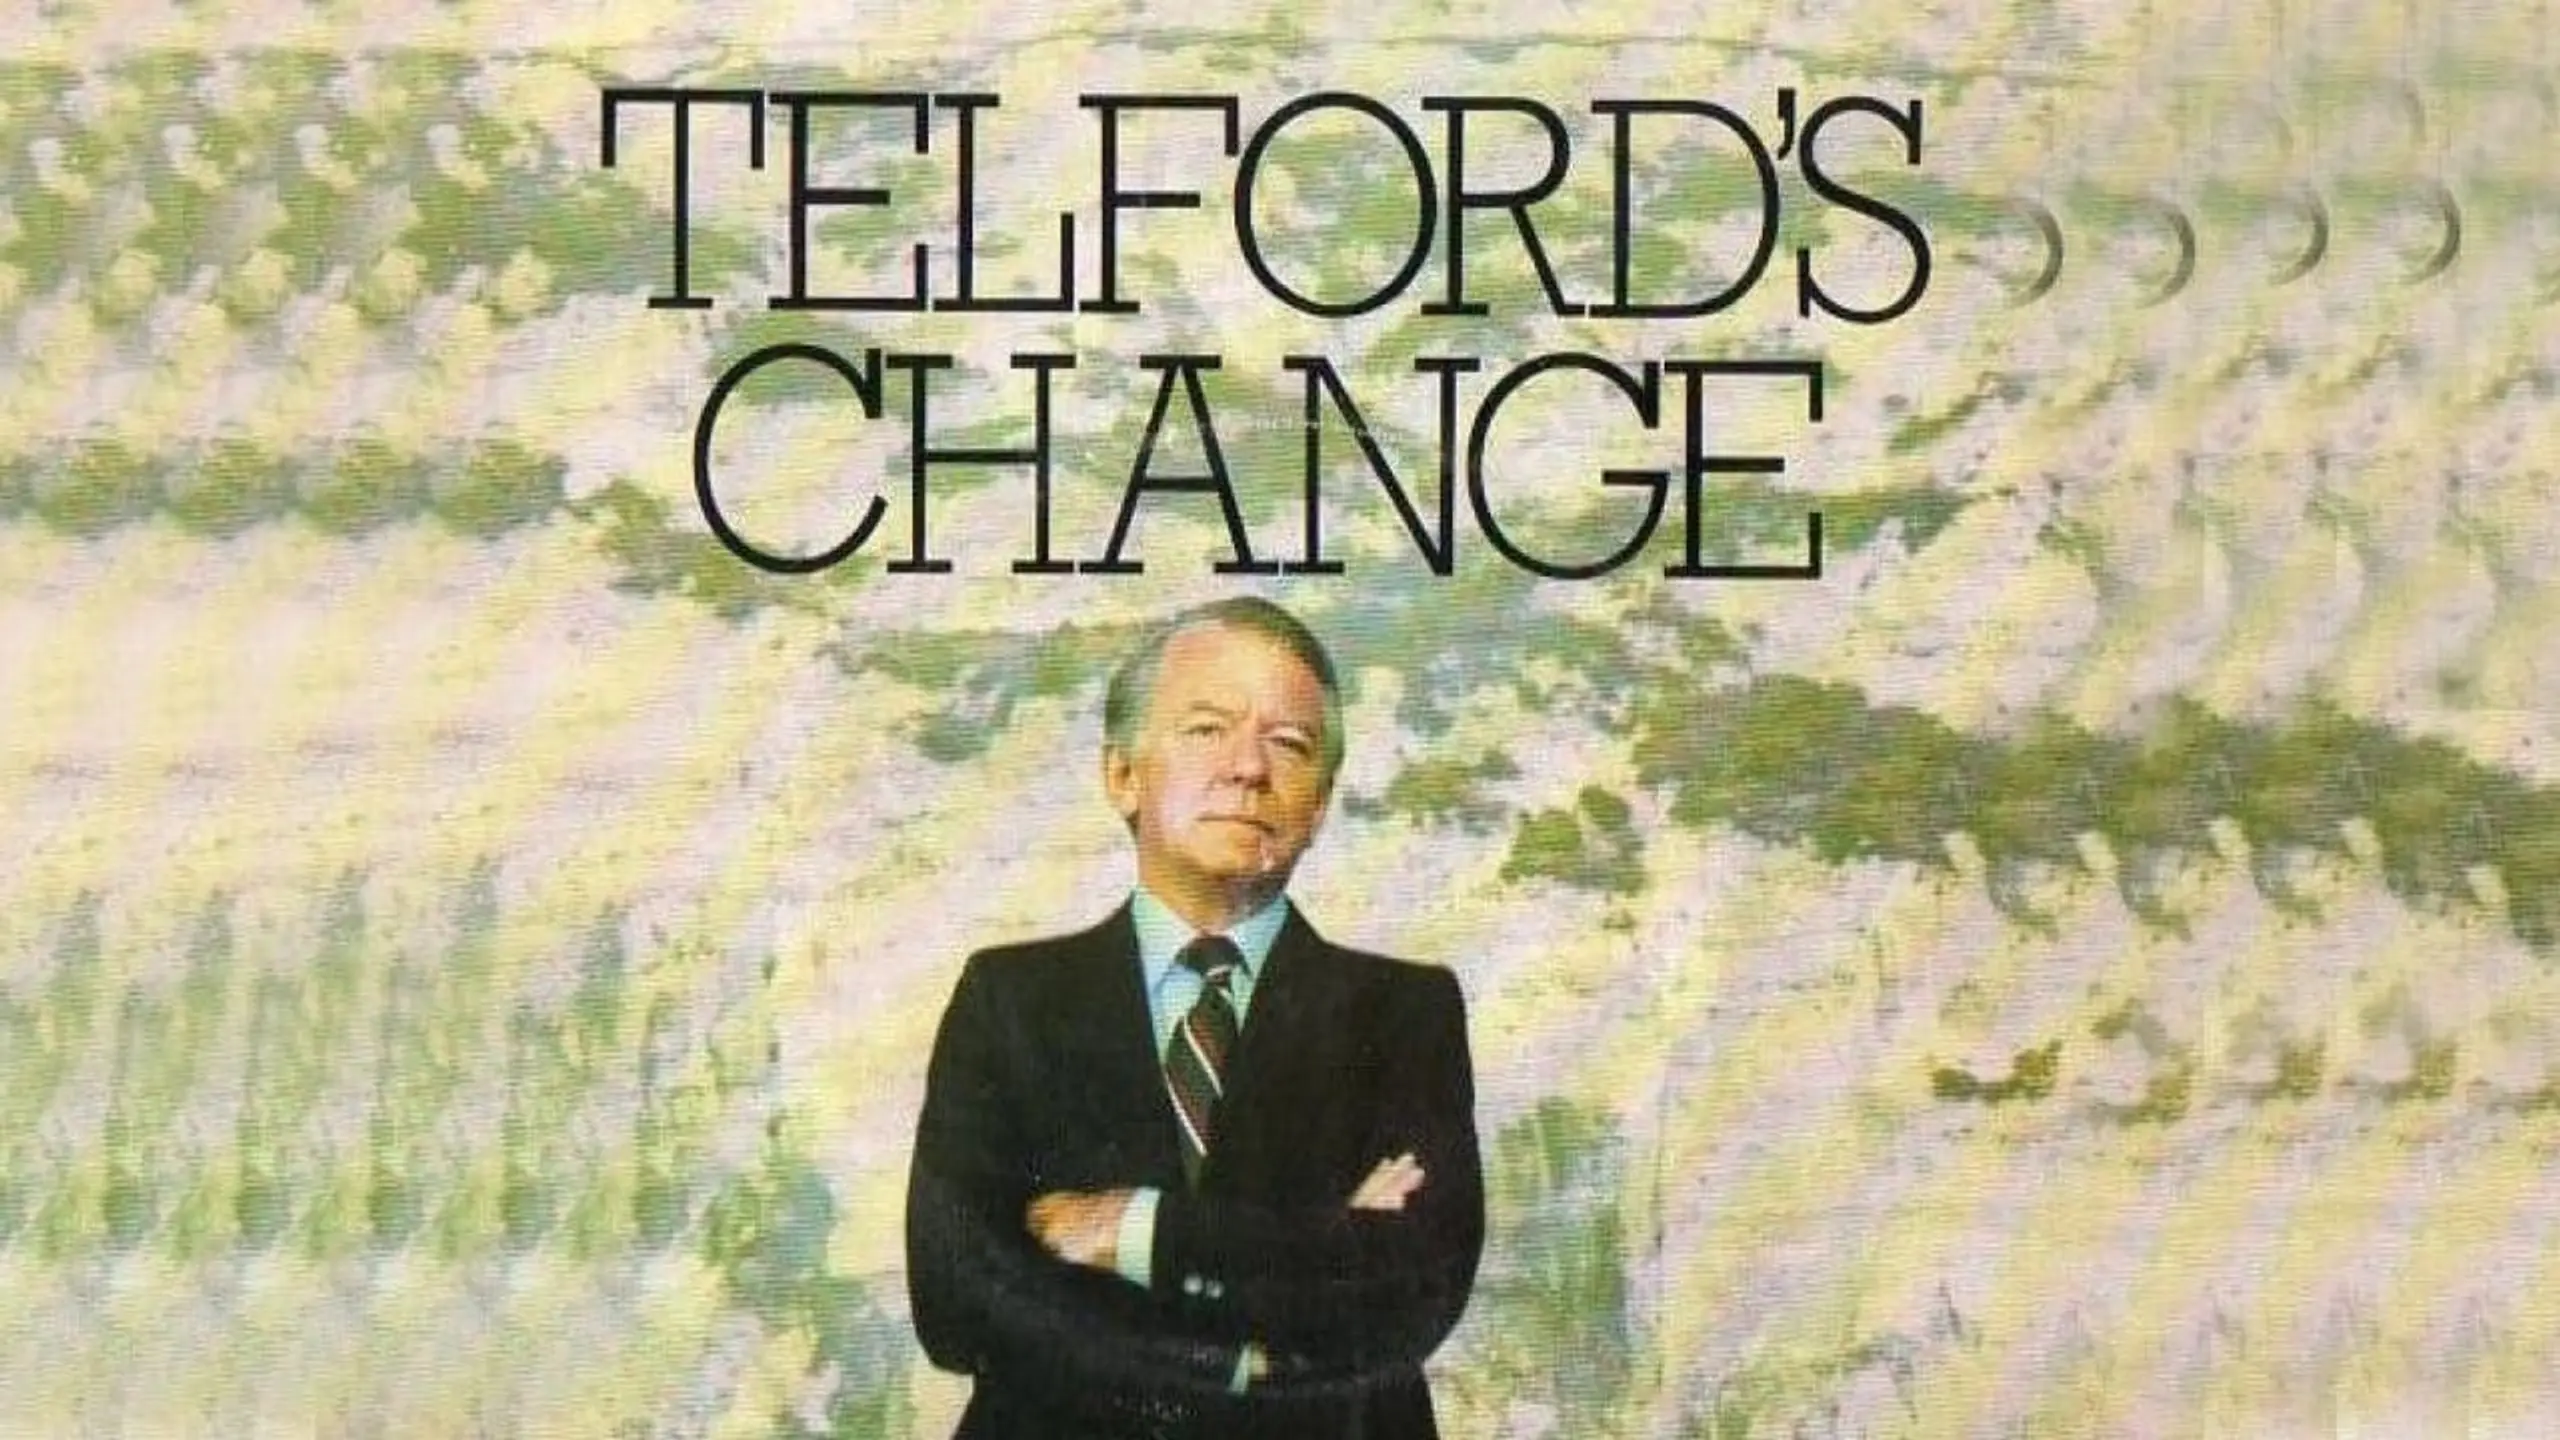 Telford's Change